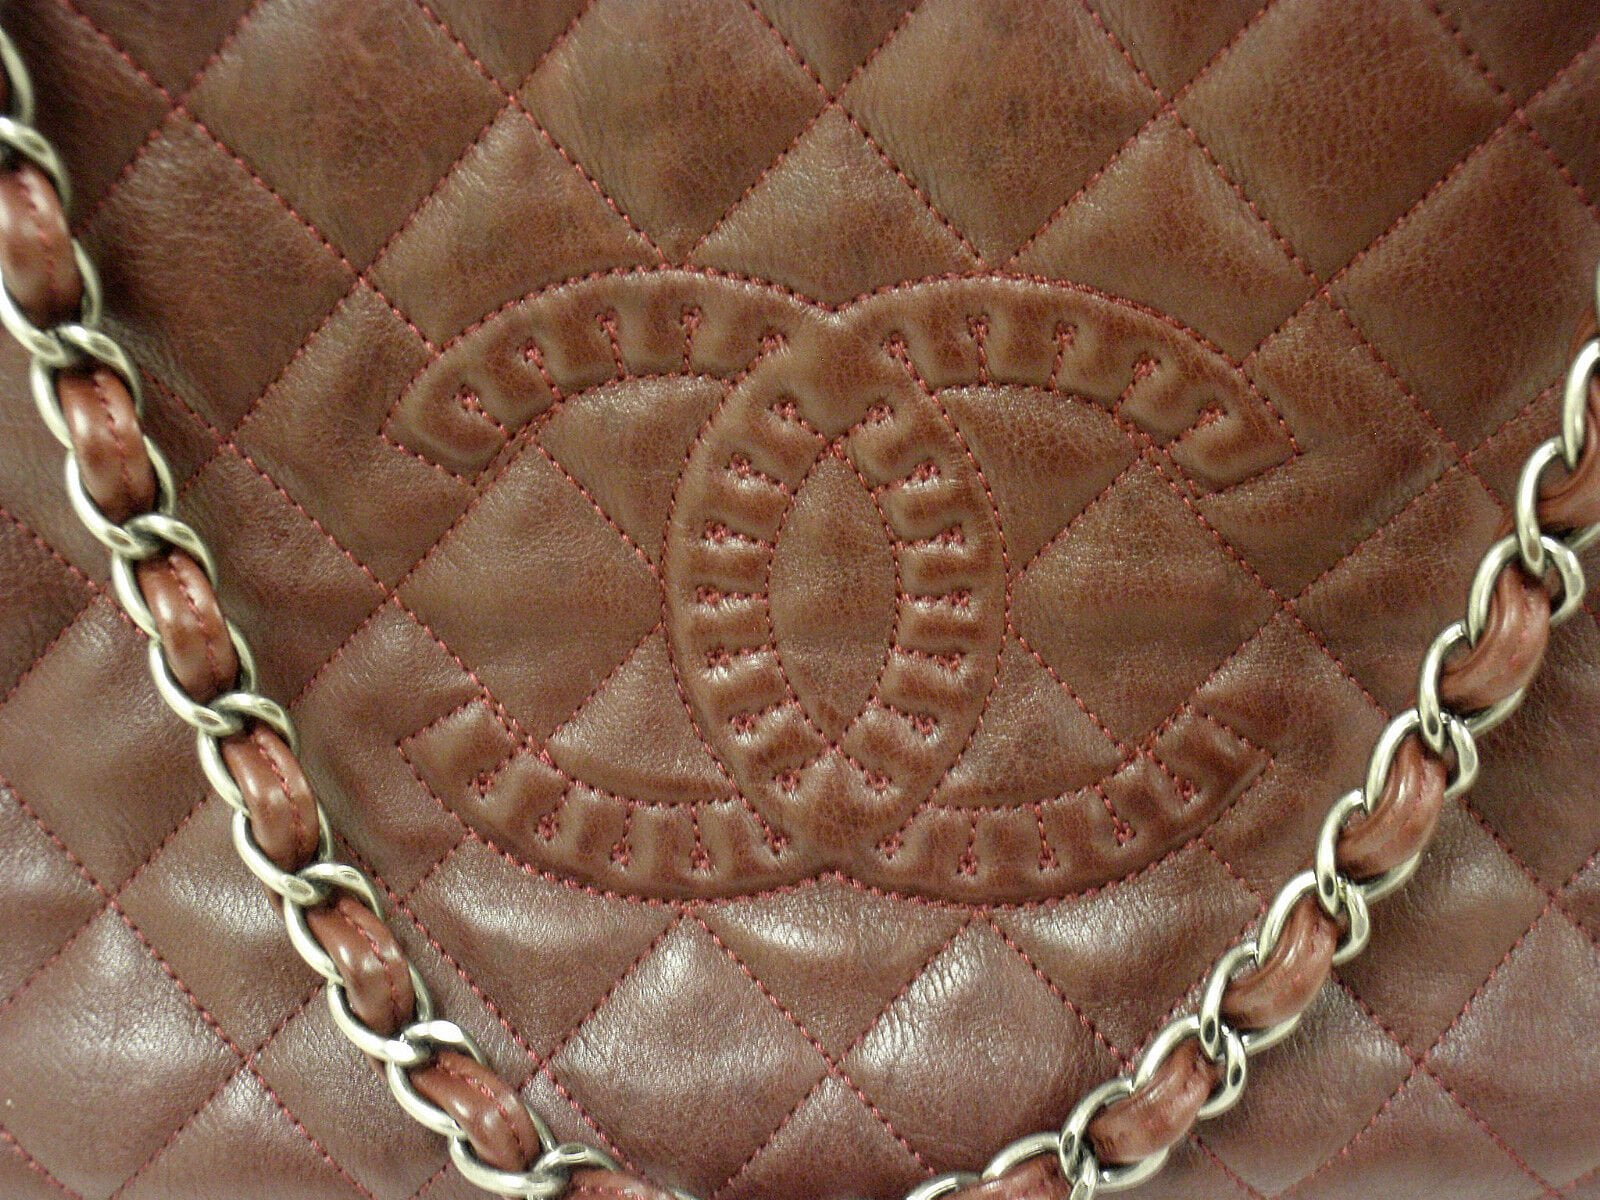 Wow! Authentic 2005 Chanel Lax Square Stitch Cream Caviar Leather Handbag